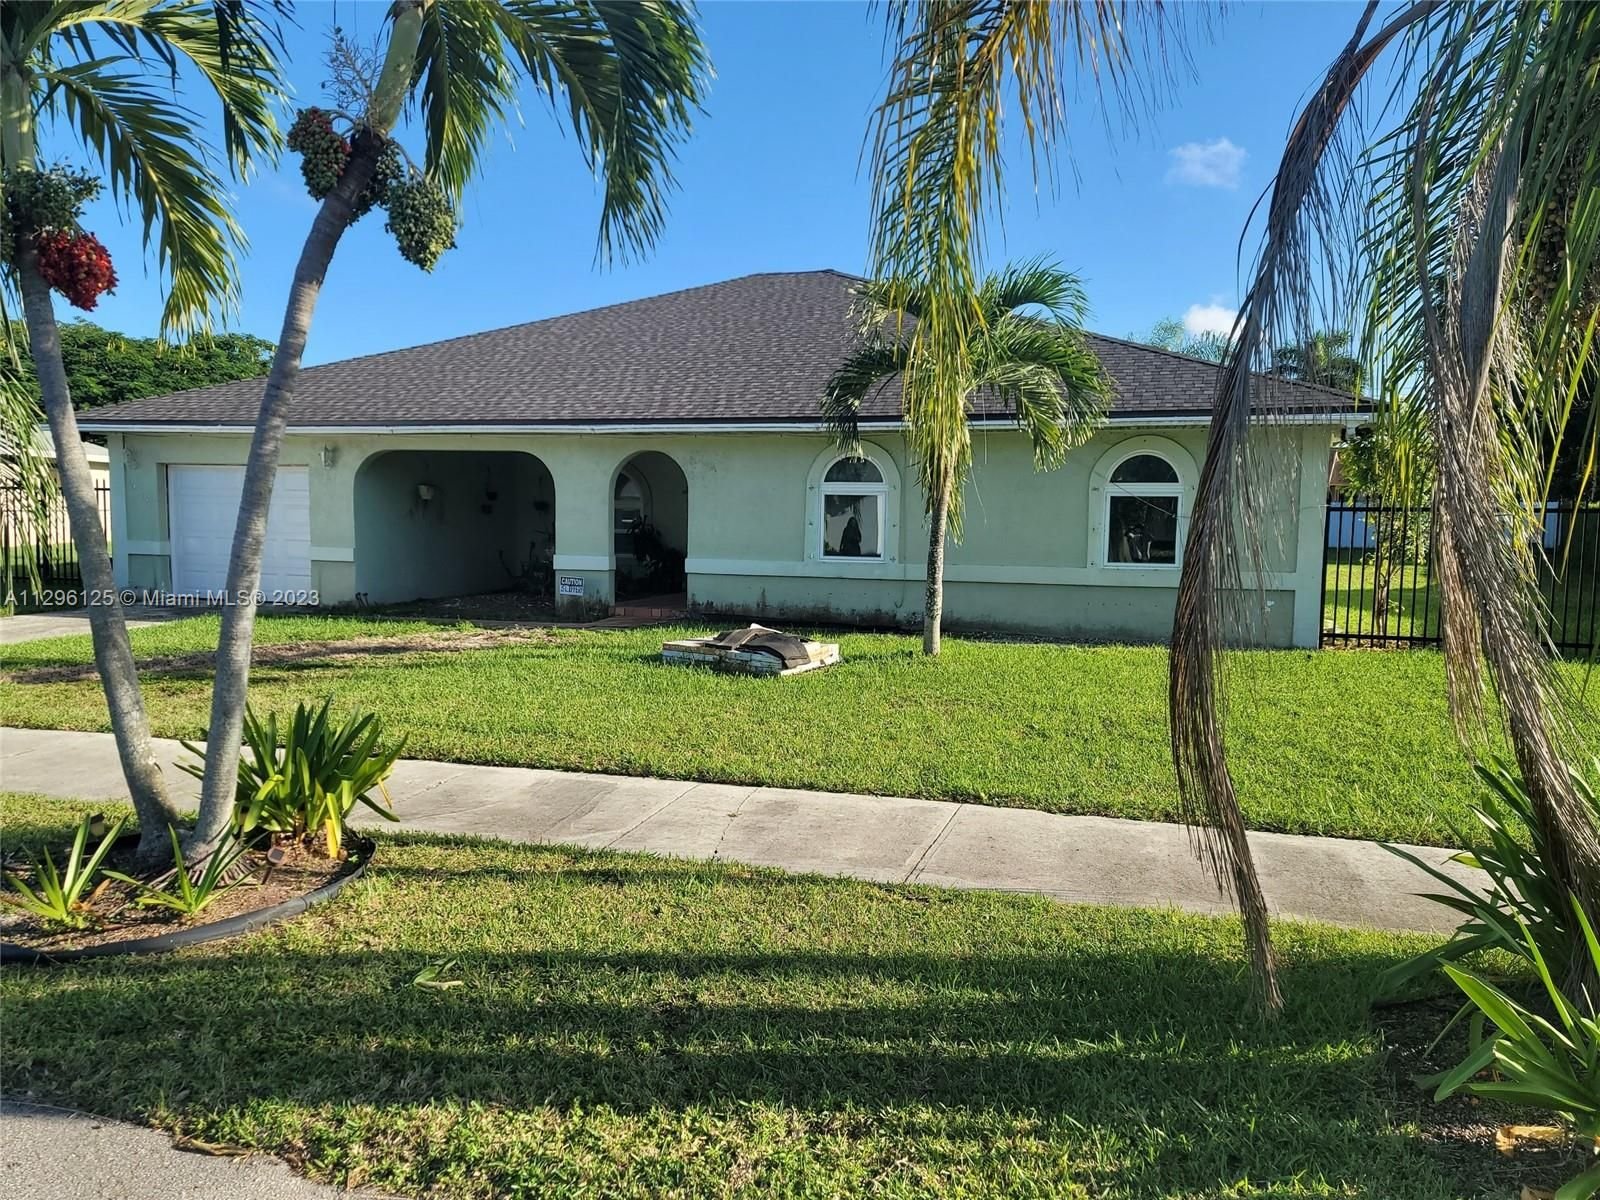 Real estate property located at 10810 167th St, Miami-Dade County, Miami, FL